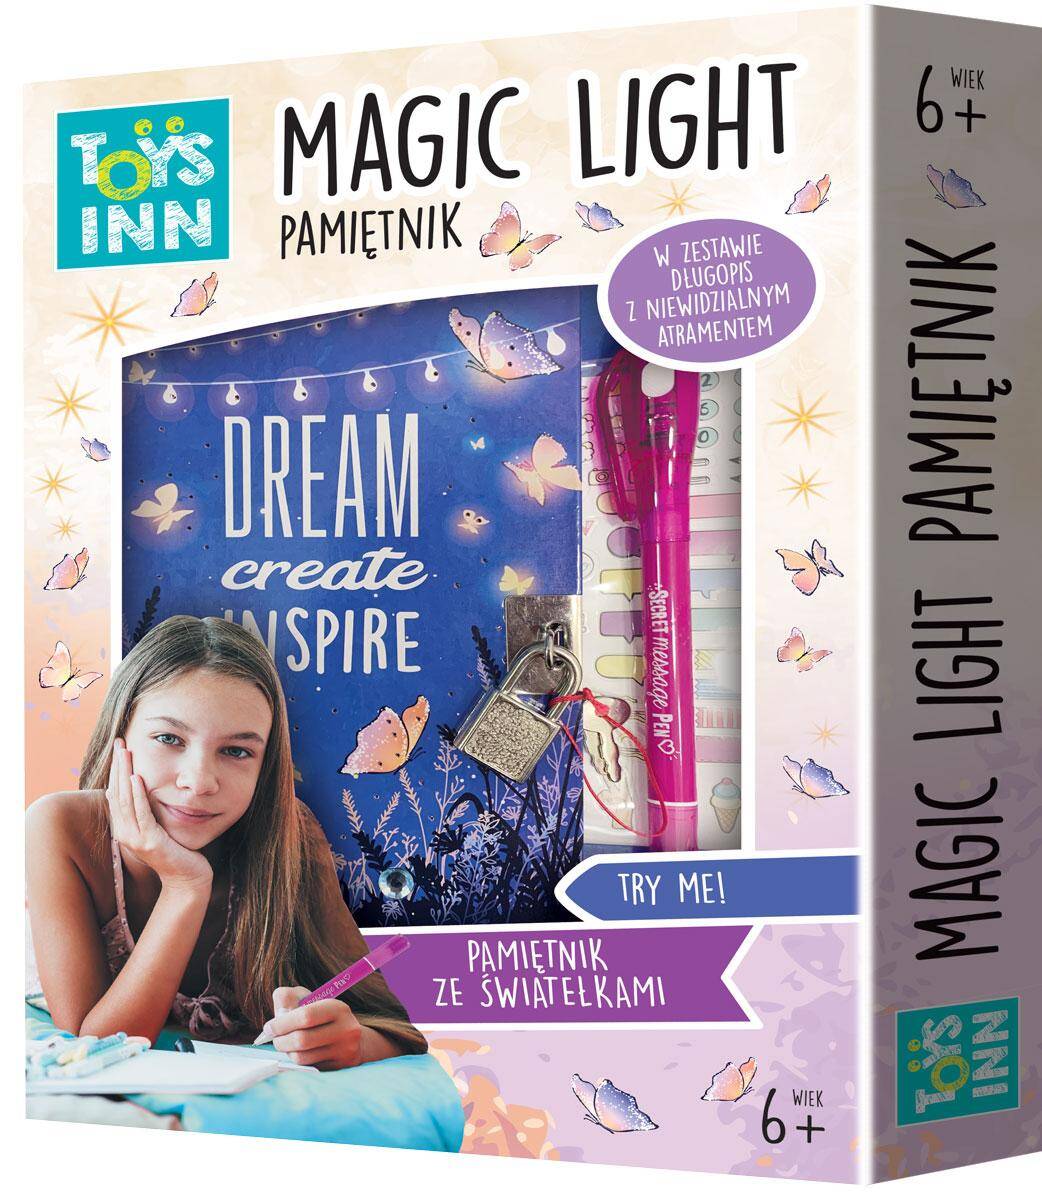 Pamiętnik ze światełkami Magic light dreams STN 7830